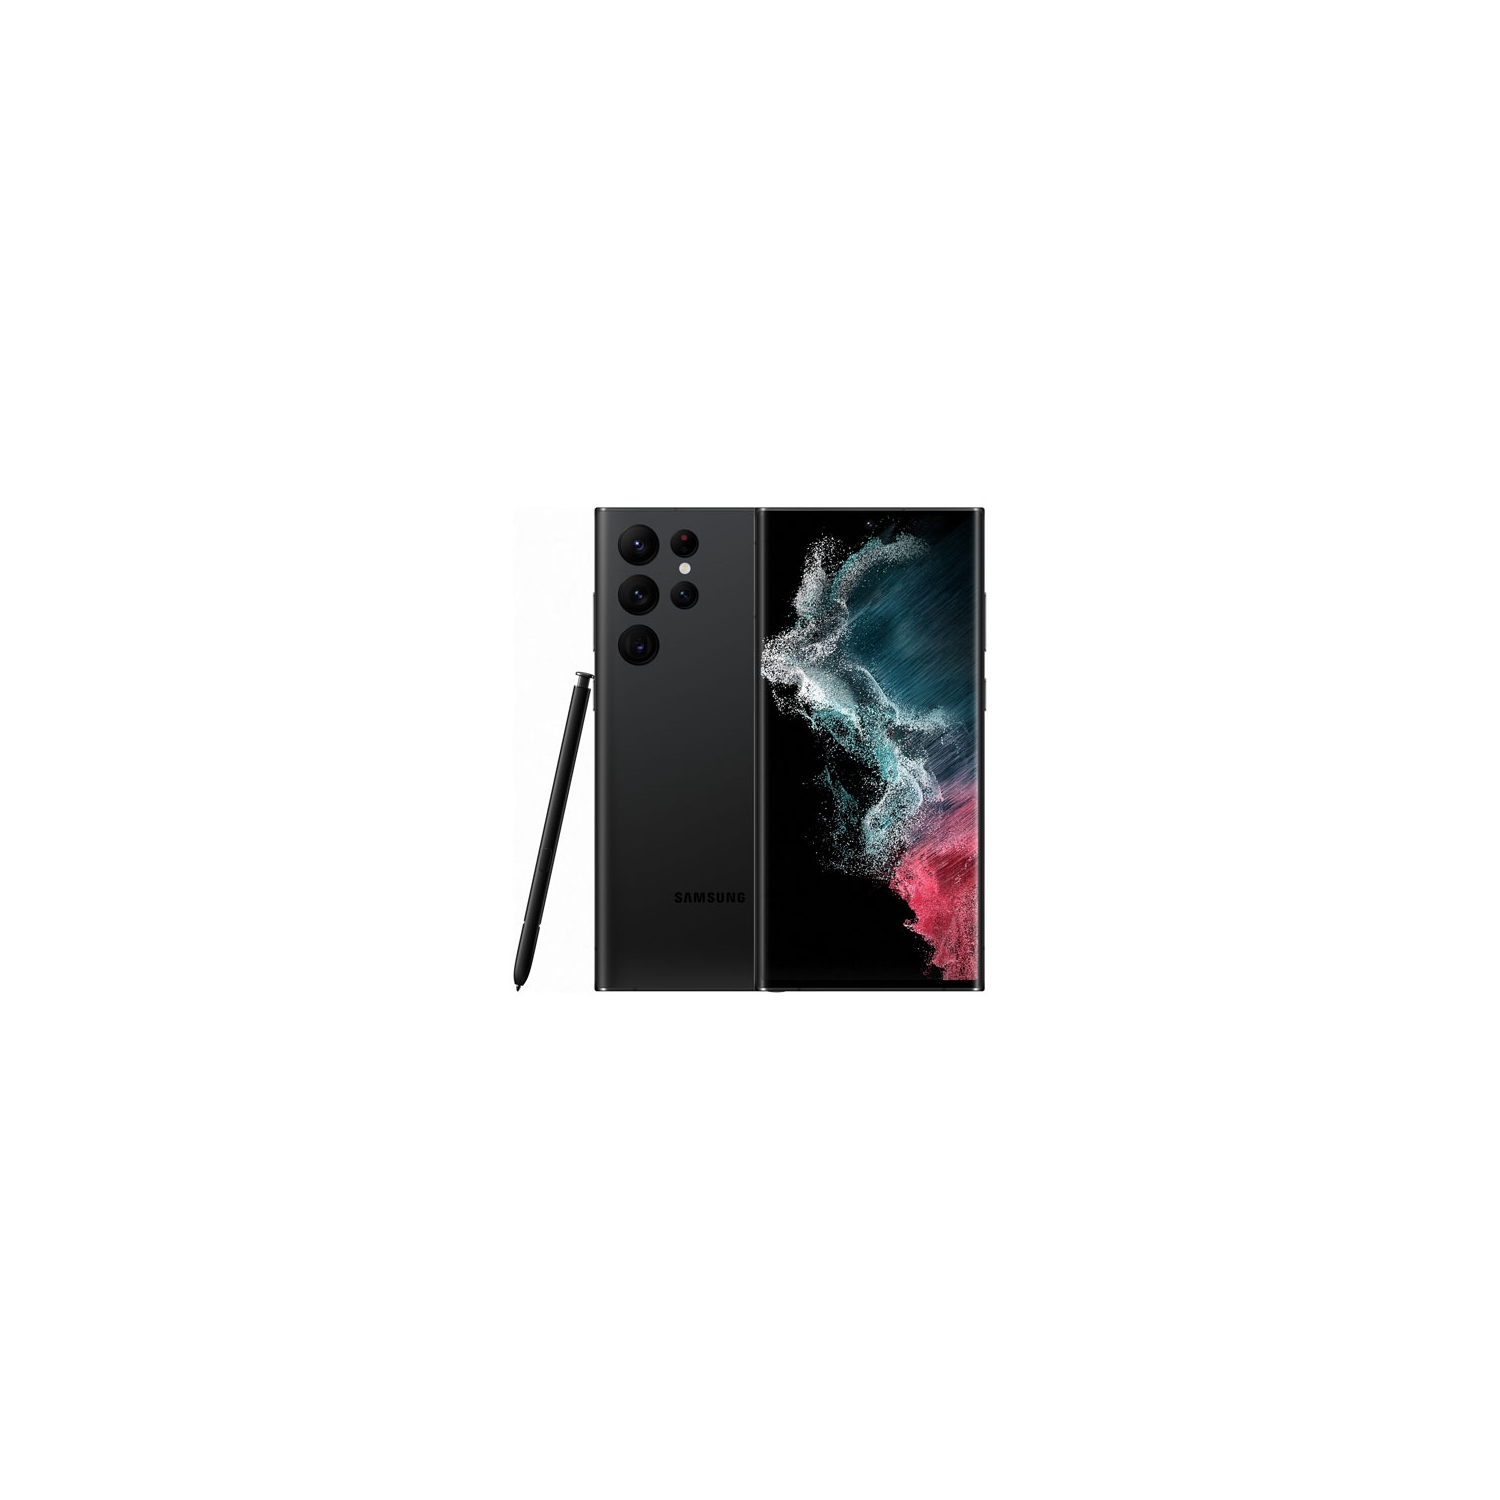 Samsung Galaxy S22 Ultra 5G - 512GB - Open Box / Like New - Phantom Black - S pen Included